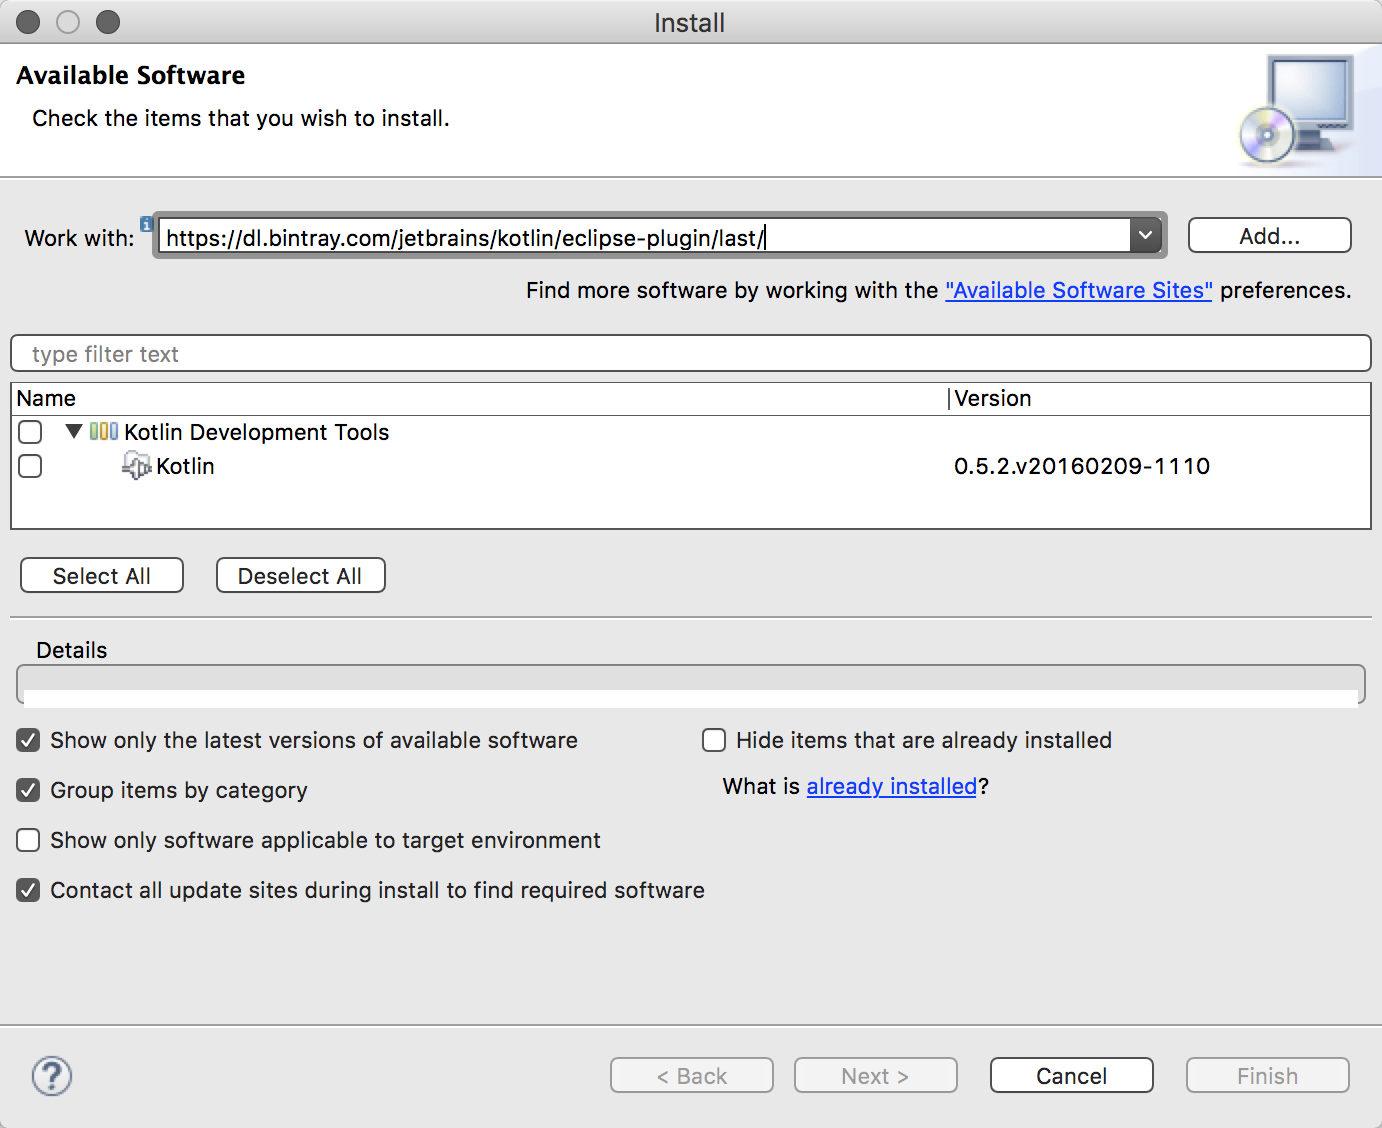 spring tool suite 3 download for windows 10 64 bit